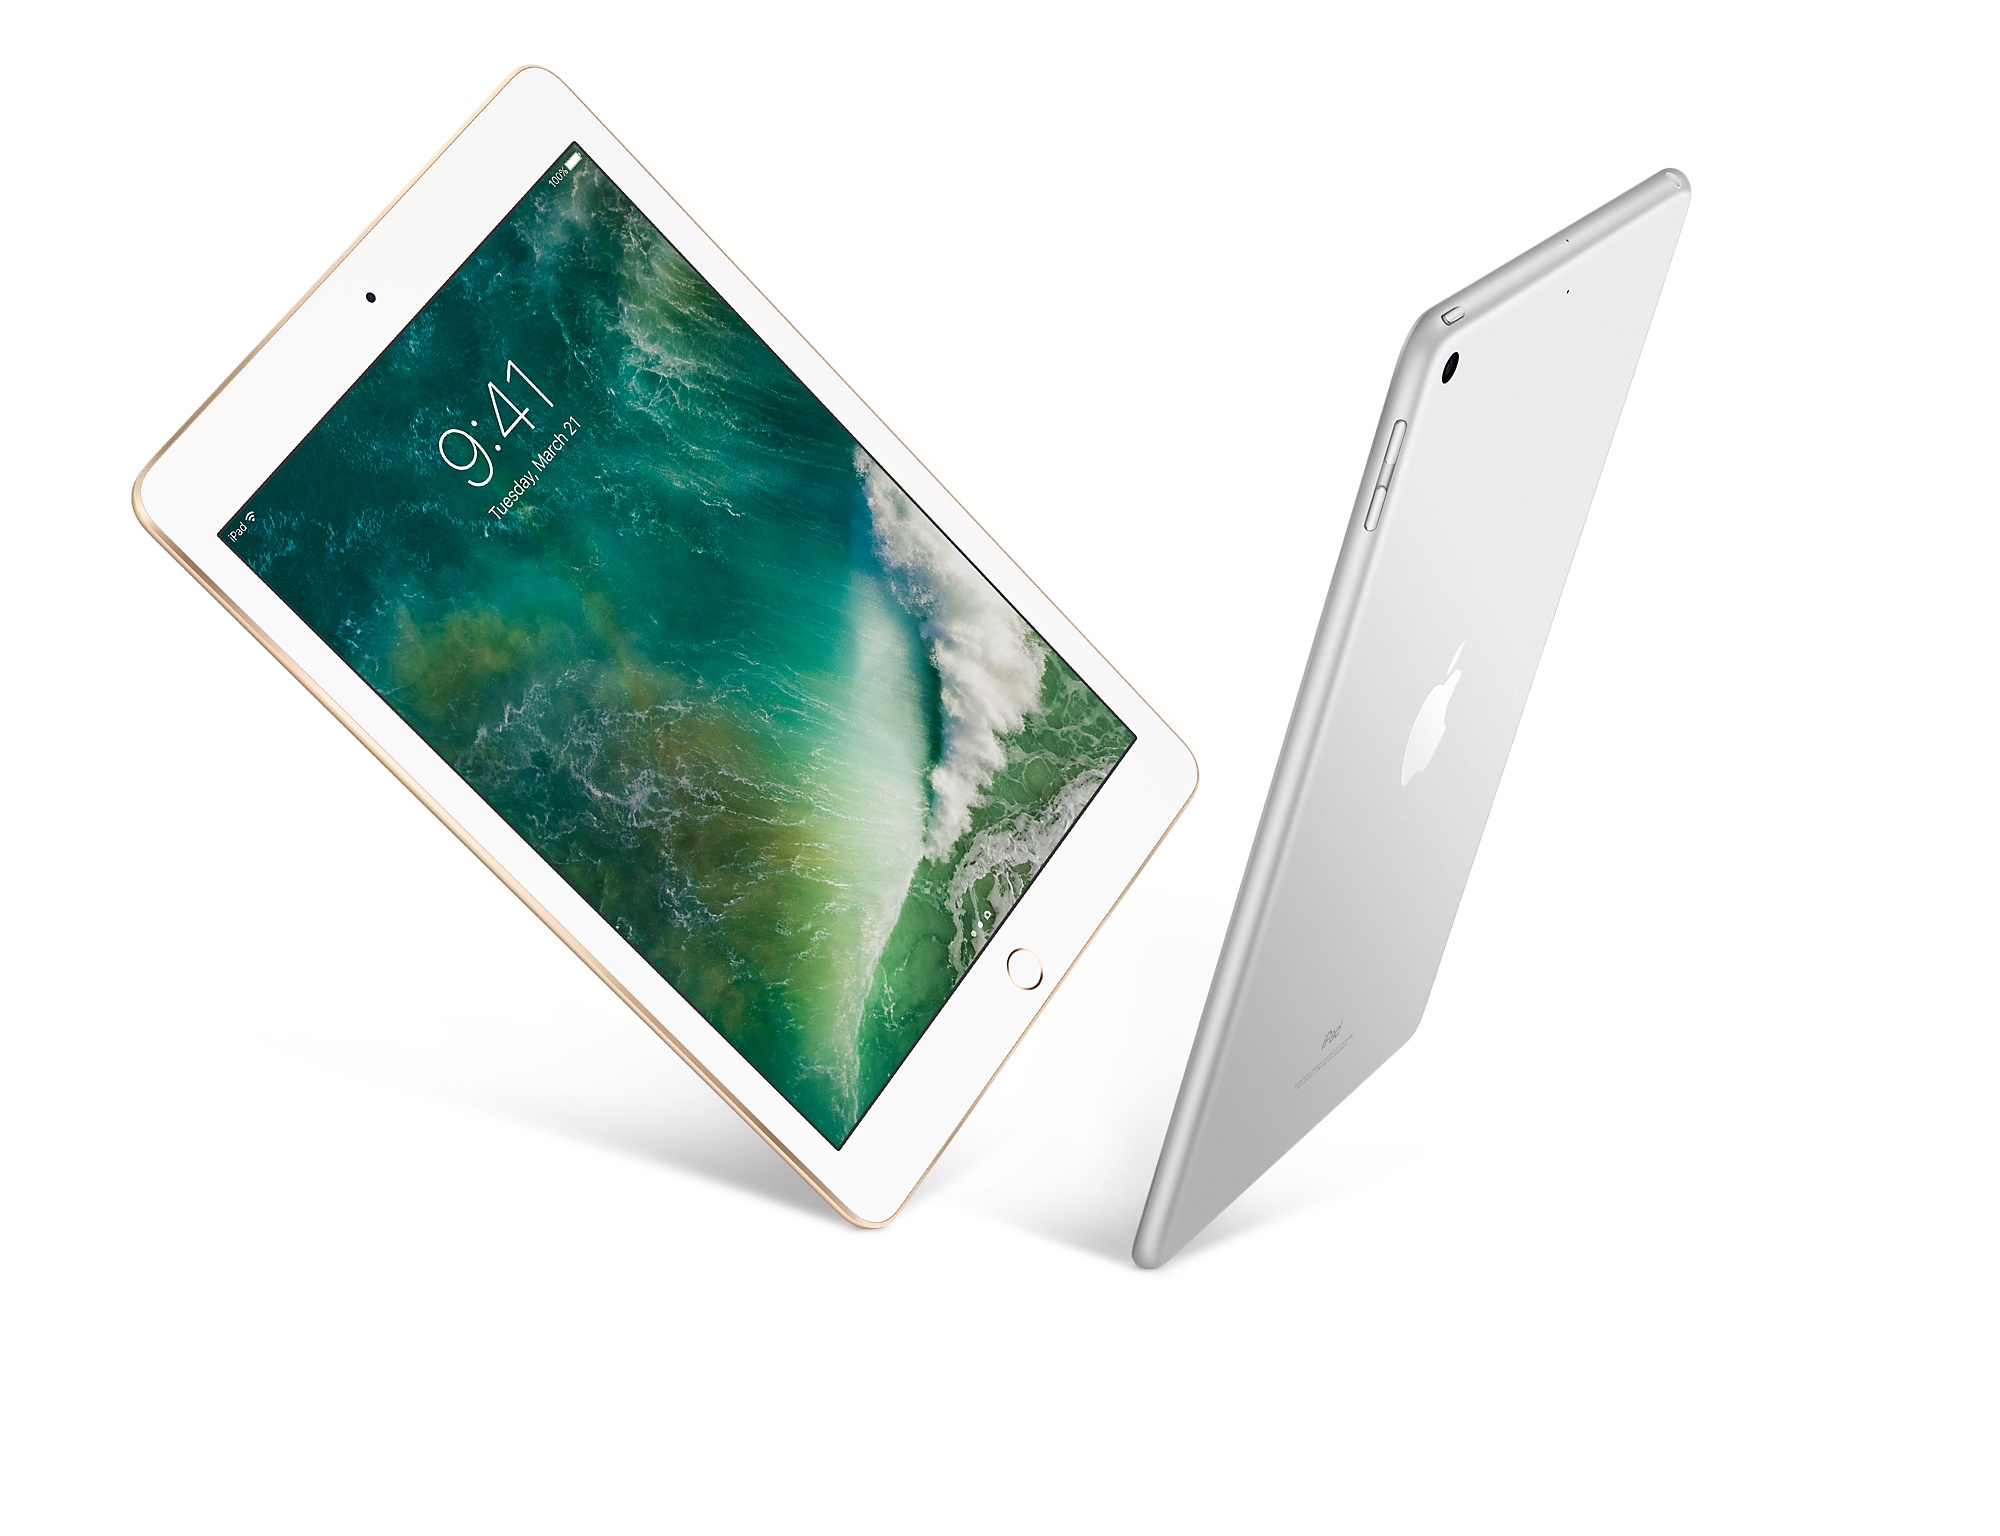 iPad (32GB, Wi-Fi + Cellular, Gold)